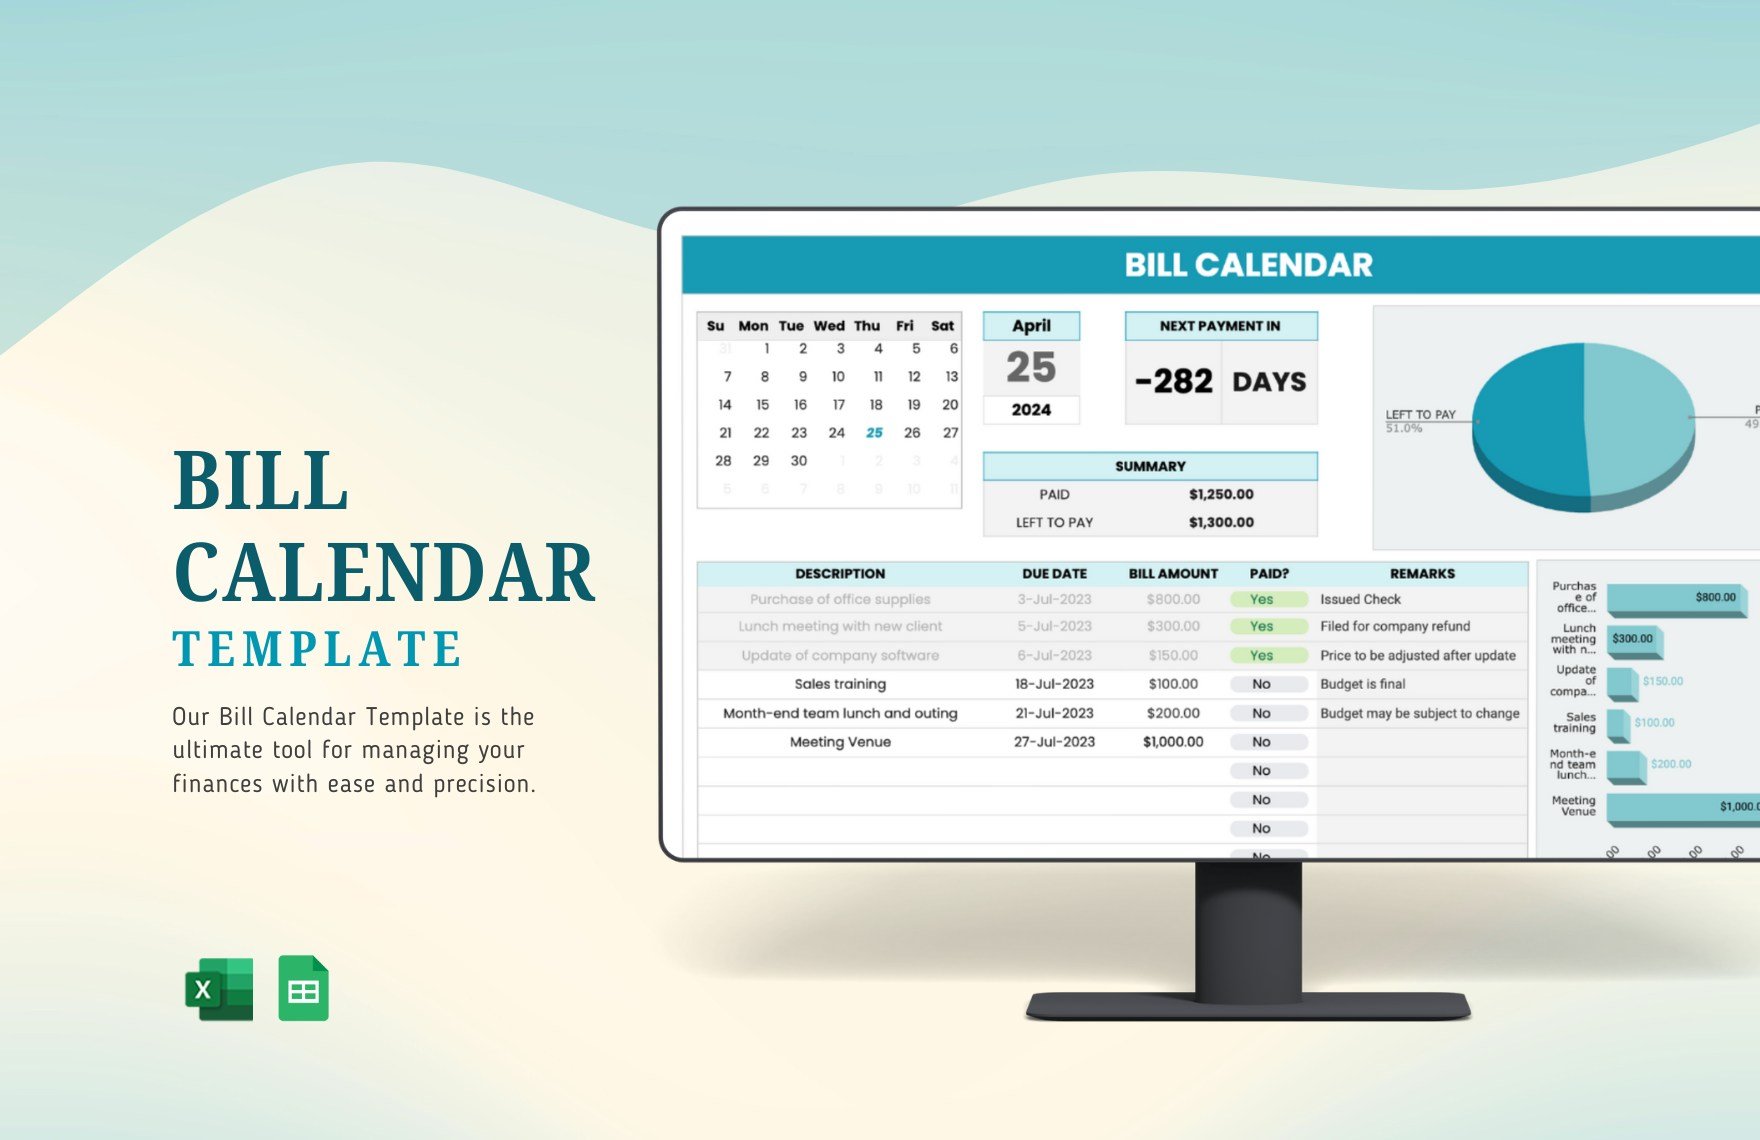 Bill Calendar Template in Excel, Google Sheets